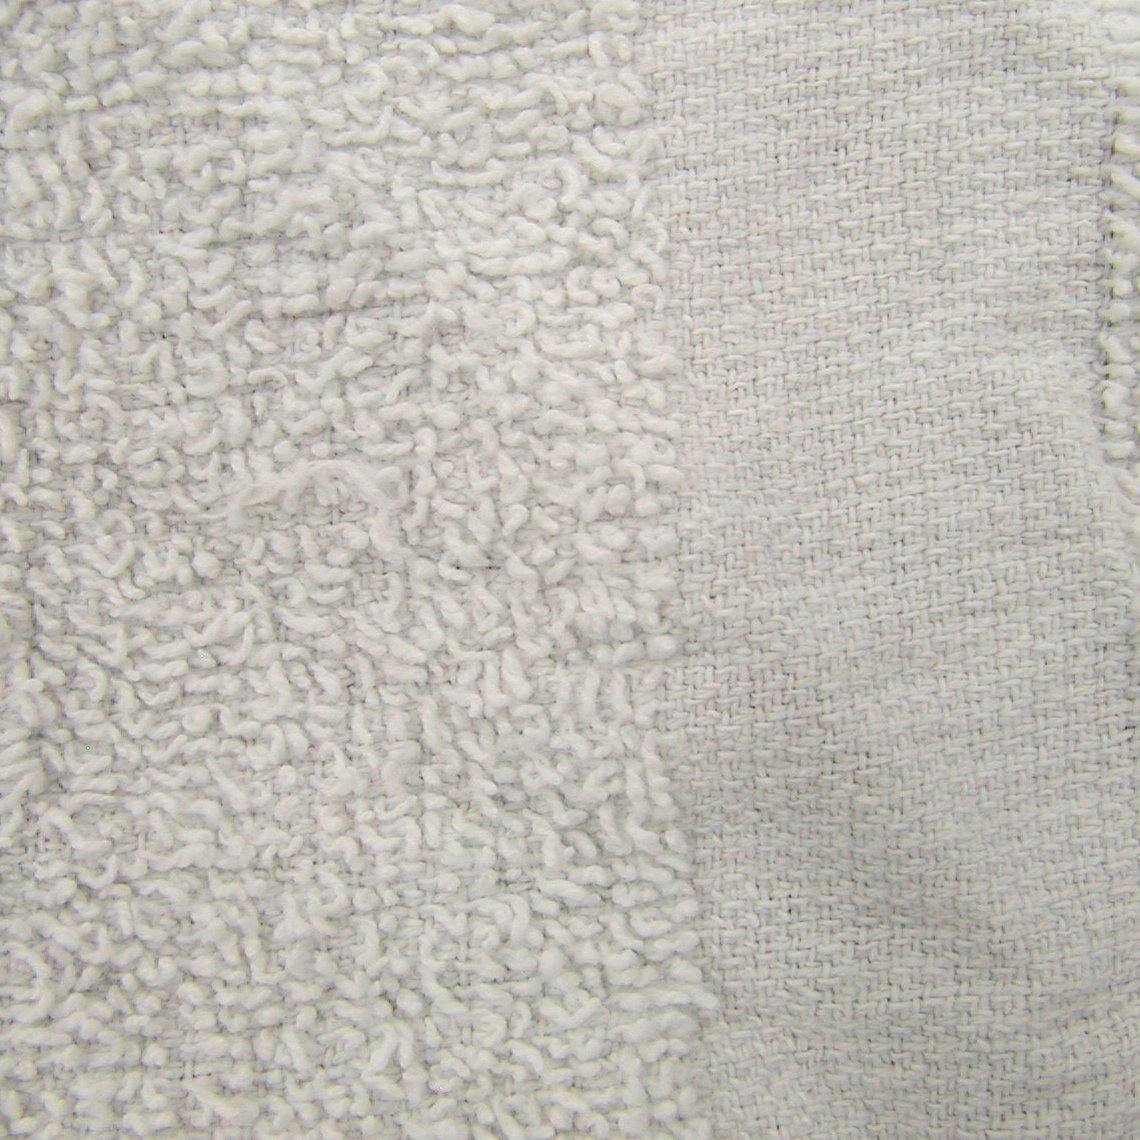 White Washcloths – A&A Wiping Cloth